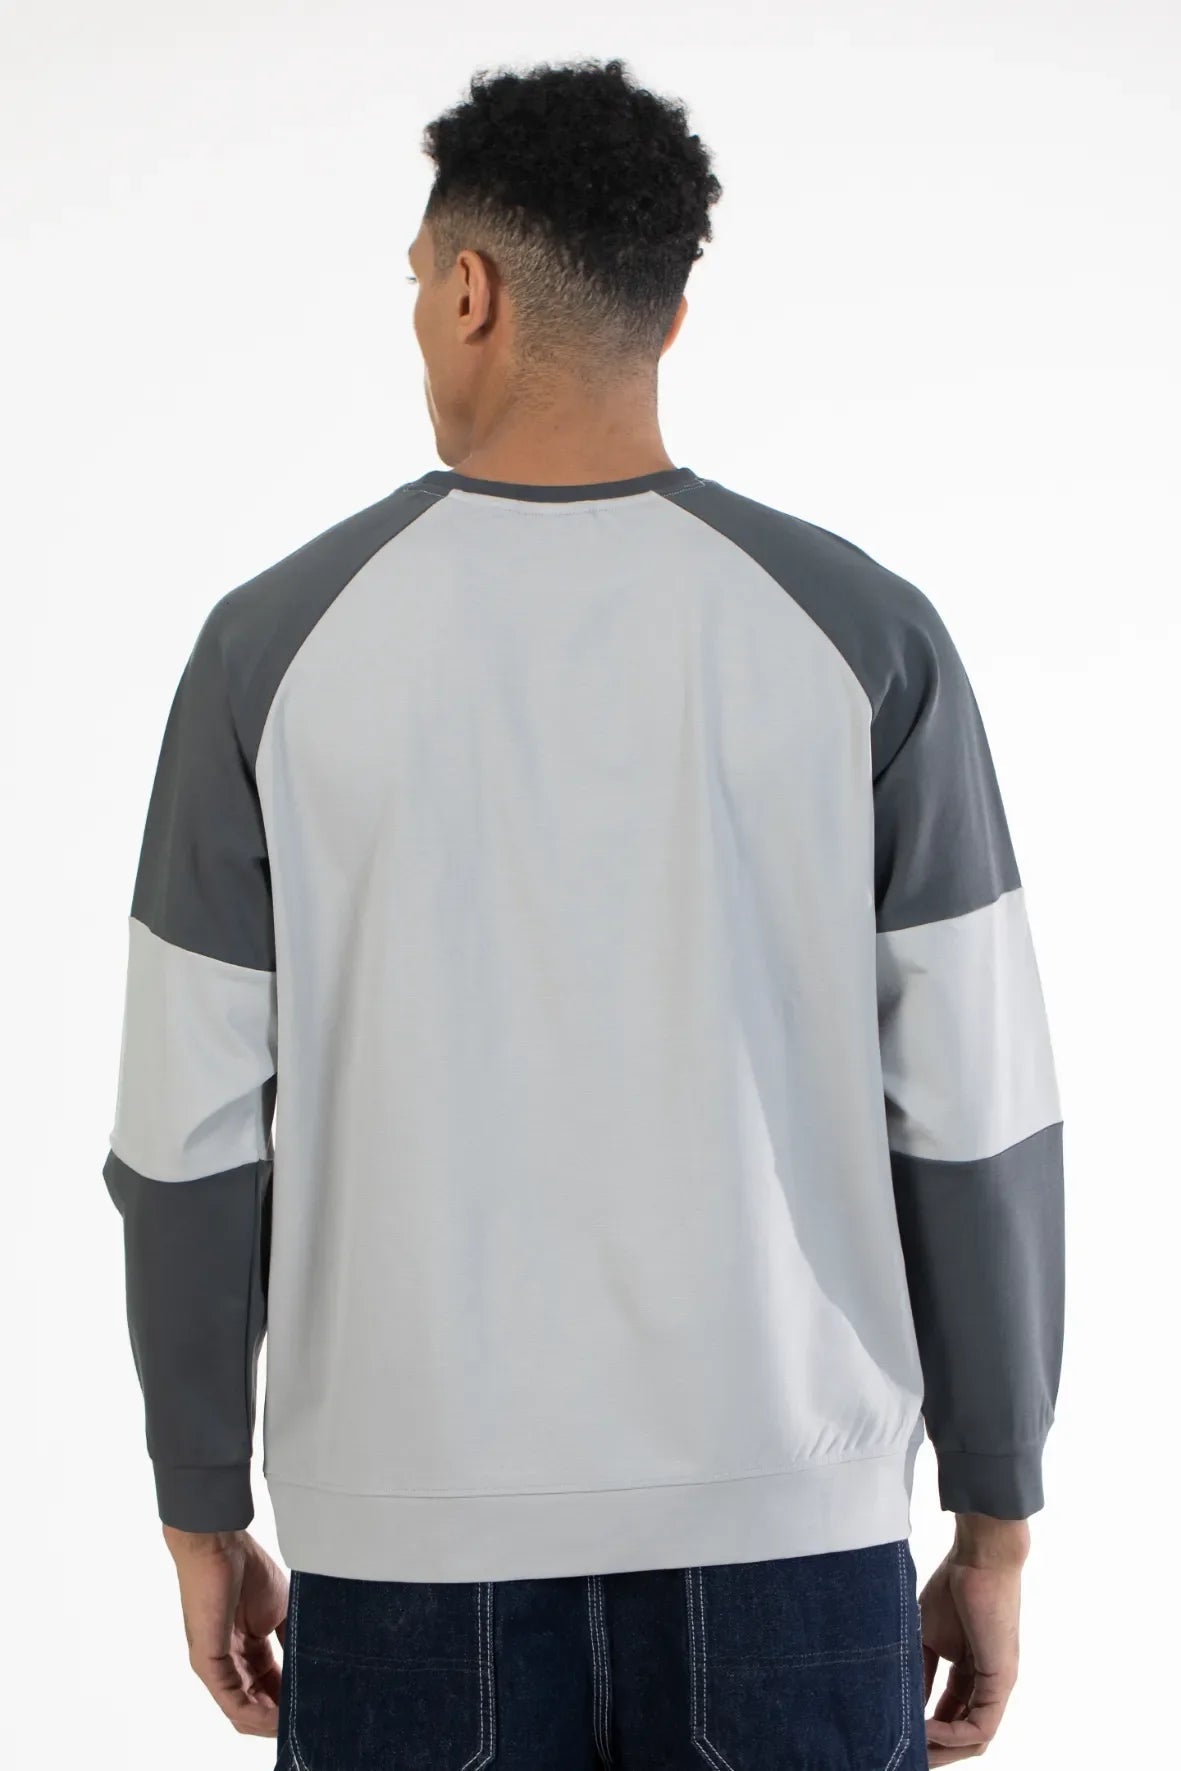 Dark Grey Raglan Sleeve Graphic Printed Men's Sweatshirt